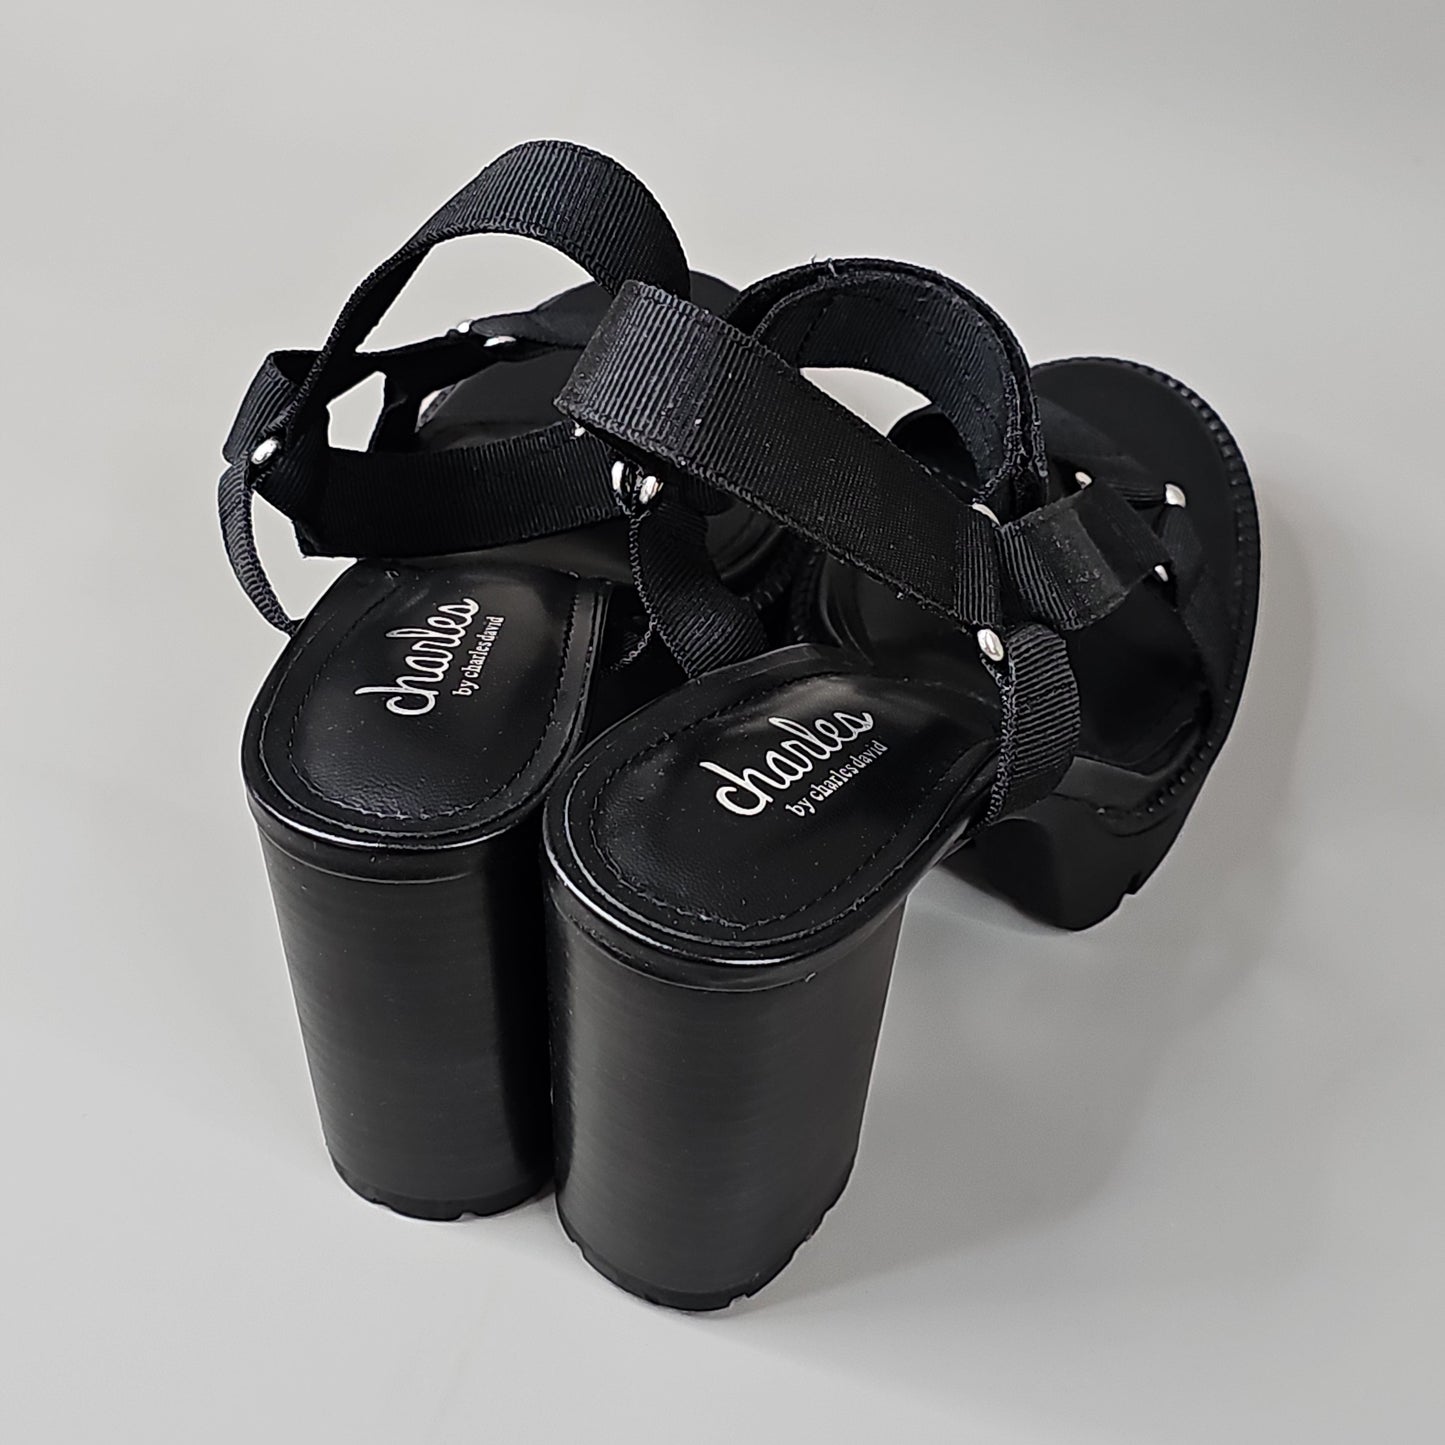 CHARLES BY CHARLES DAVID Women's Vast Sport Sandal Shoe Sz 11 M Black (New)